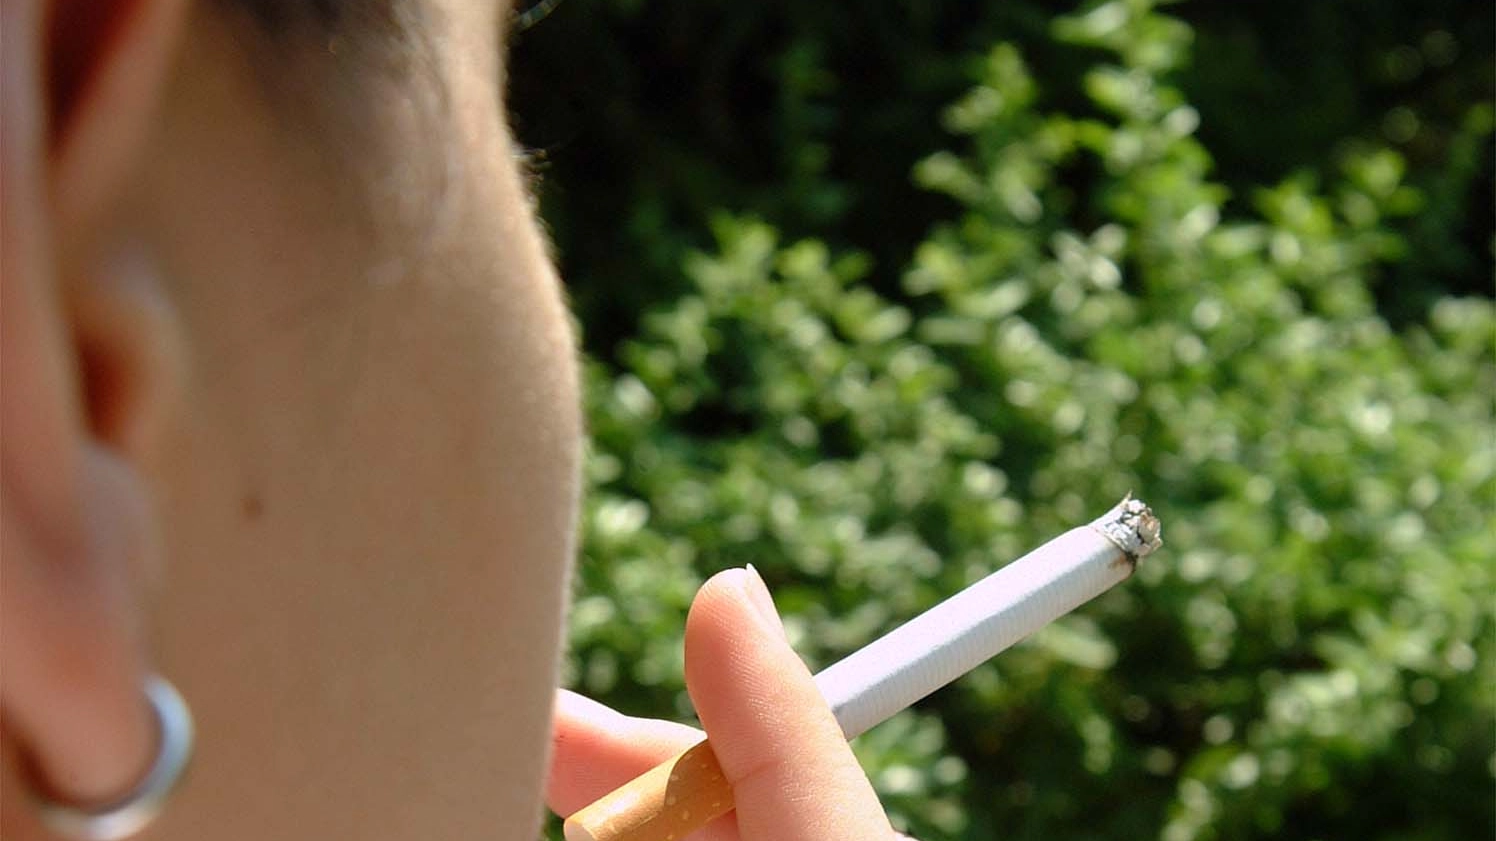 Sigaretta, fumo, foto generica (Newpress)